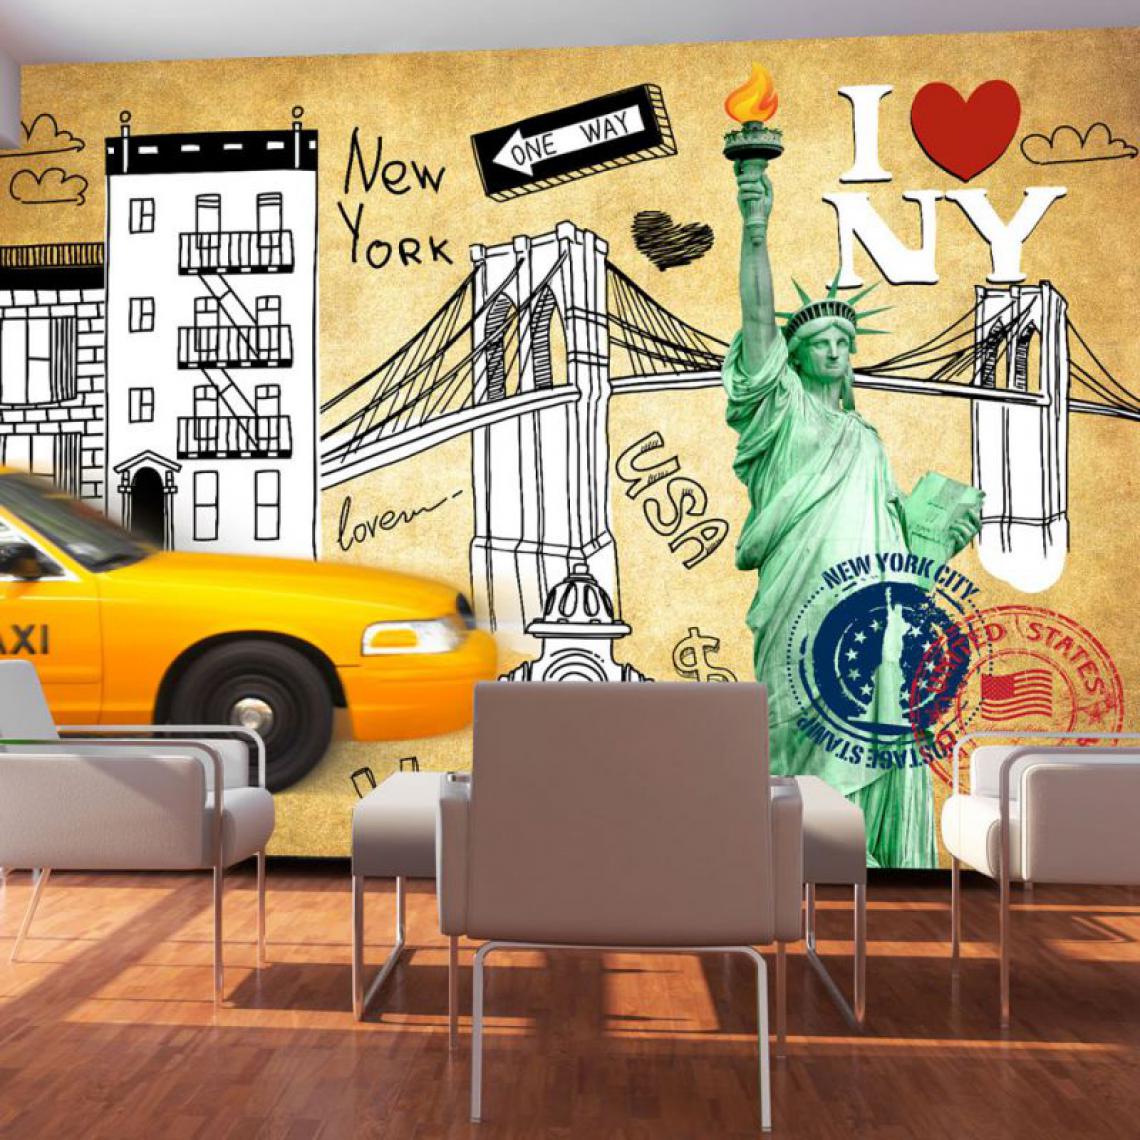 Artgeist - Papier peint - One way - New York .Taille : 100x70 - Papier peint